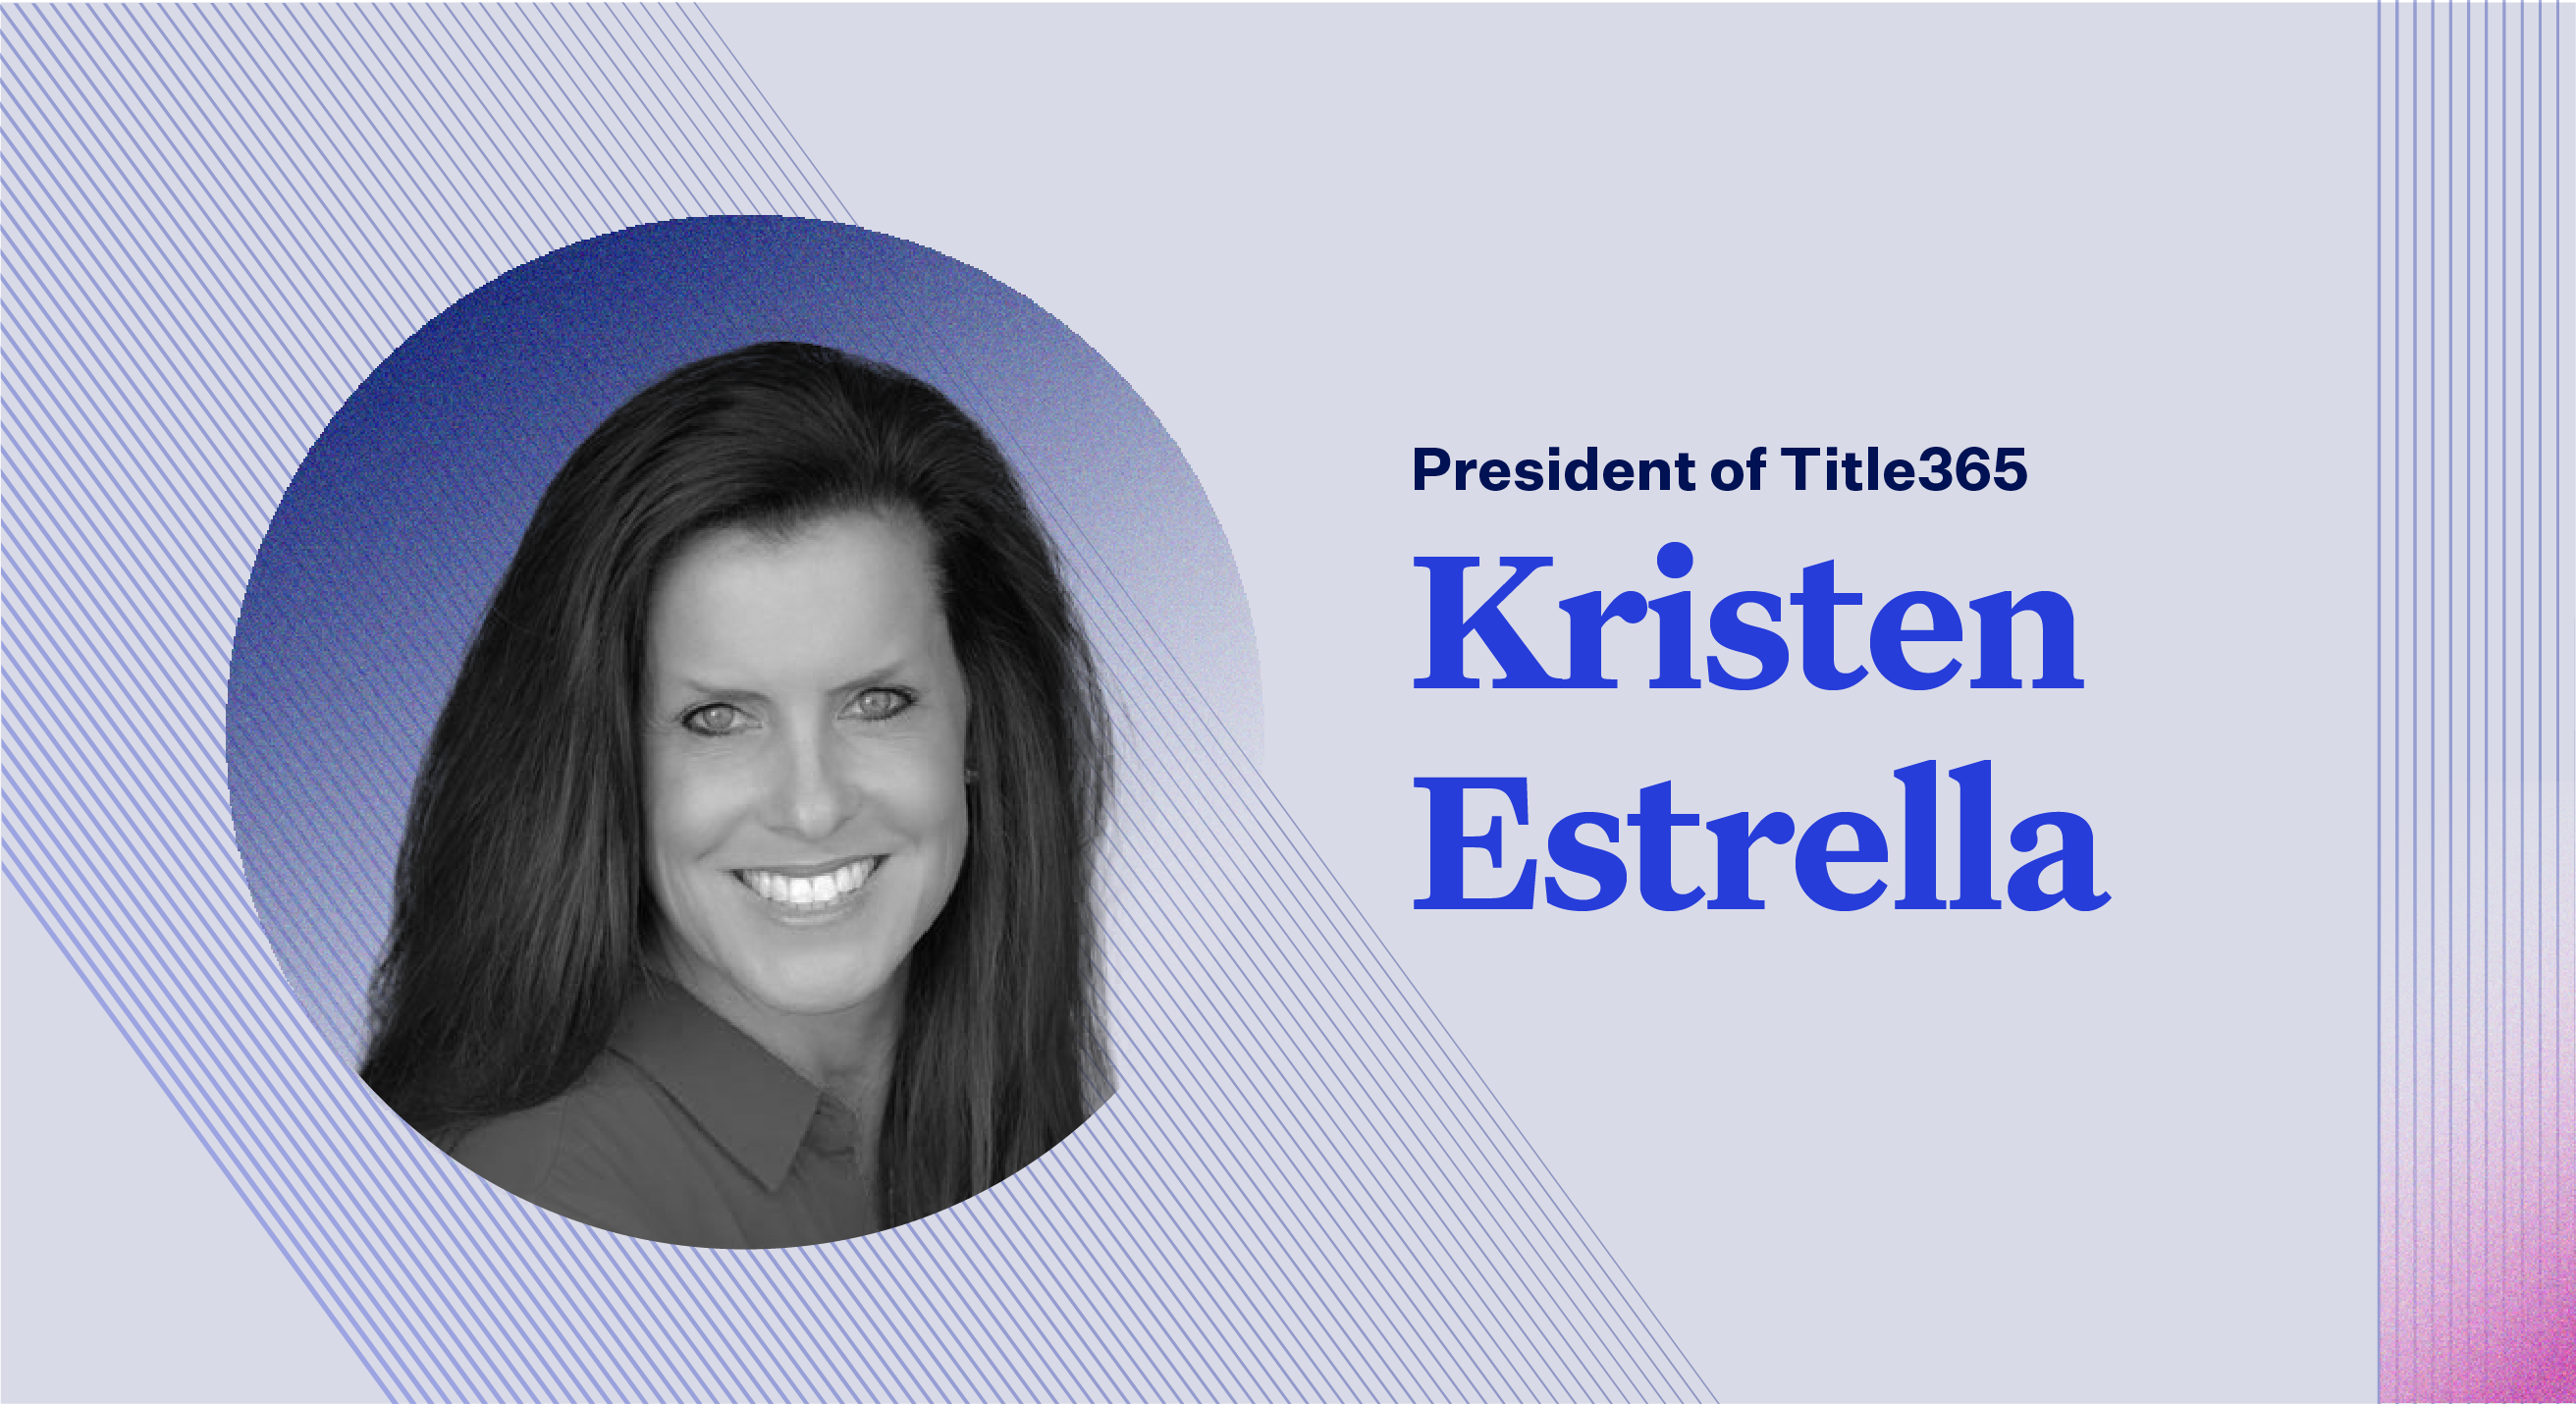 Introducing Kristen Estrella as President of Title365